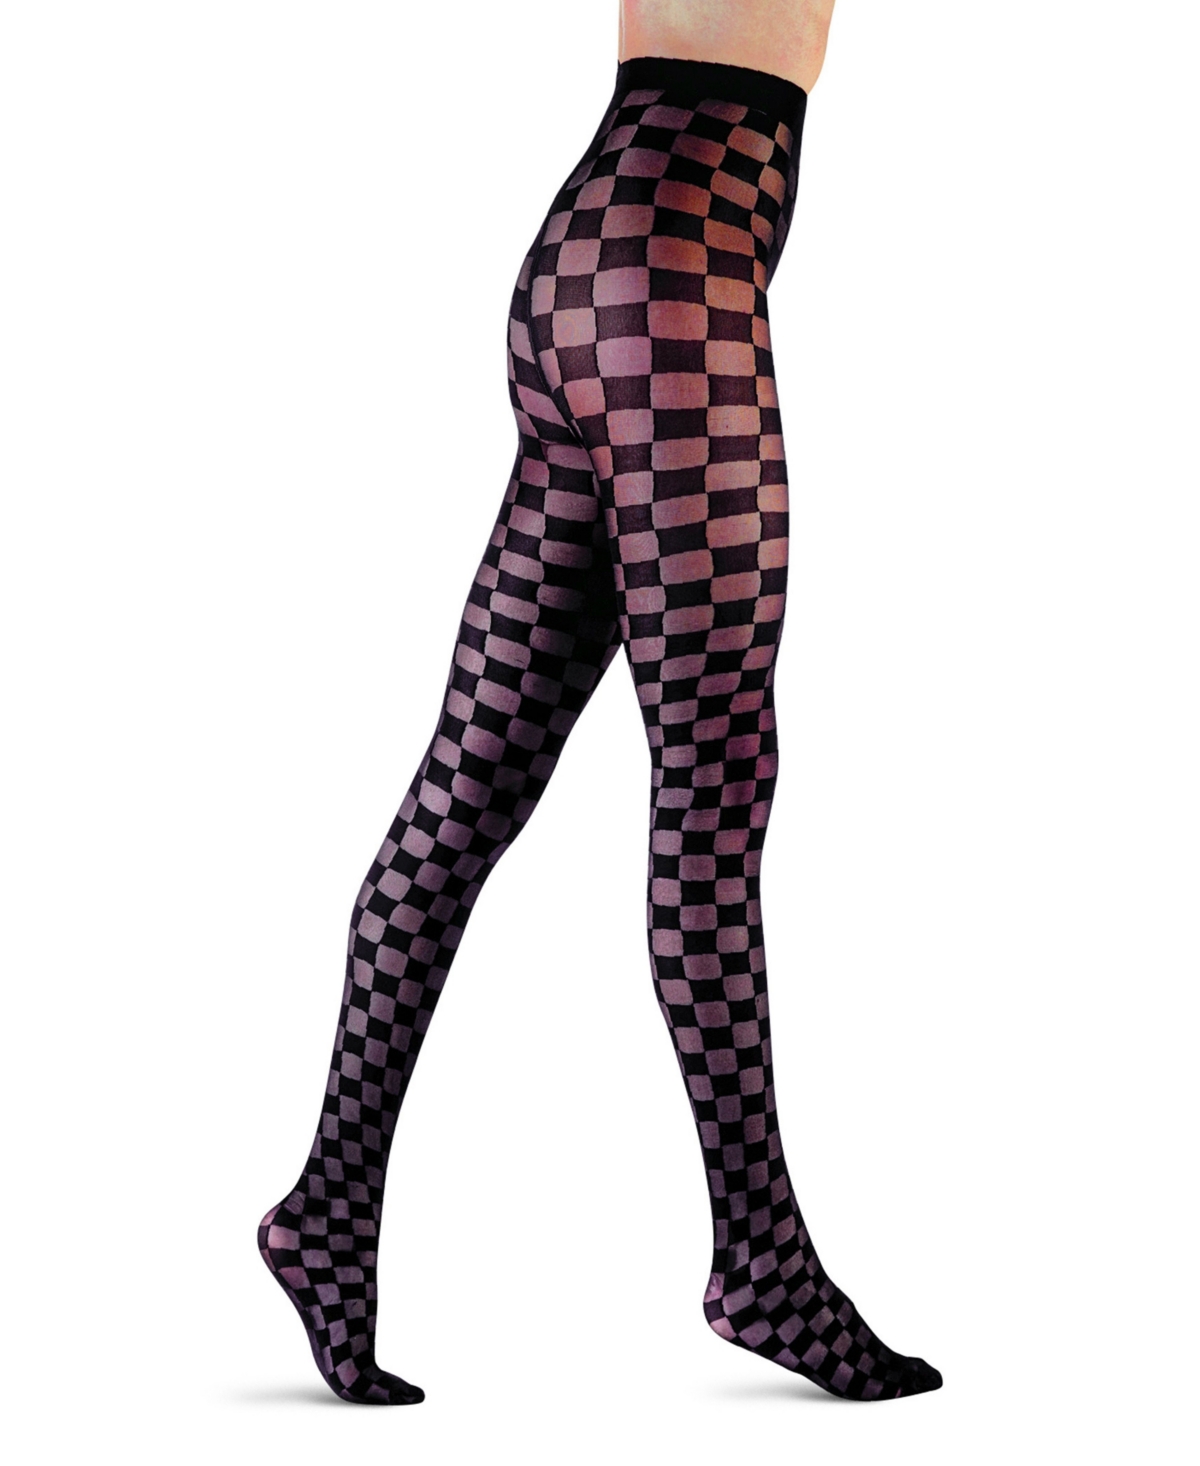 Women's European Made Checkered Tights - Black